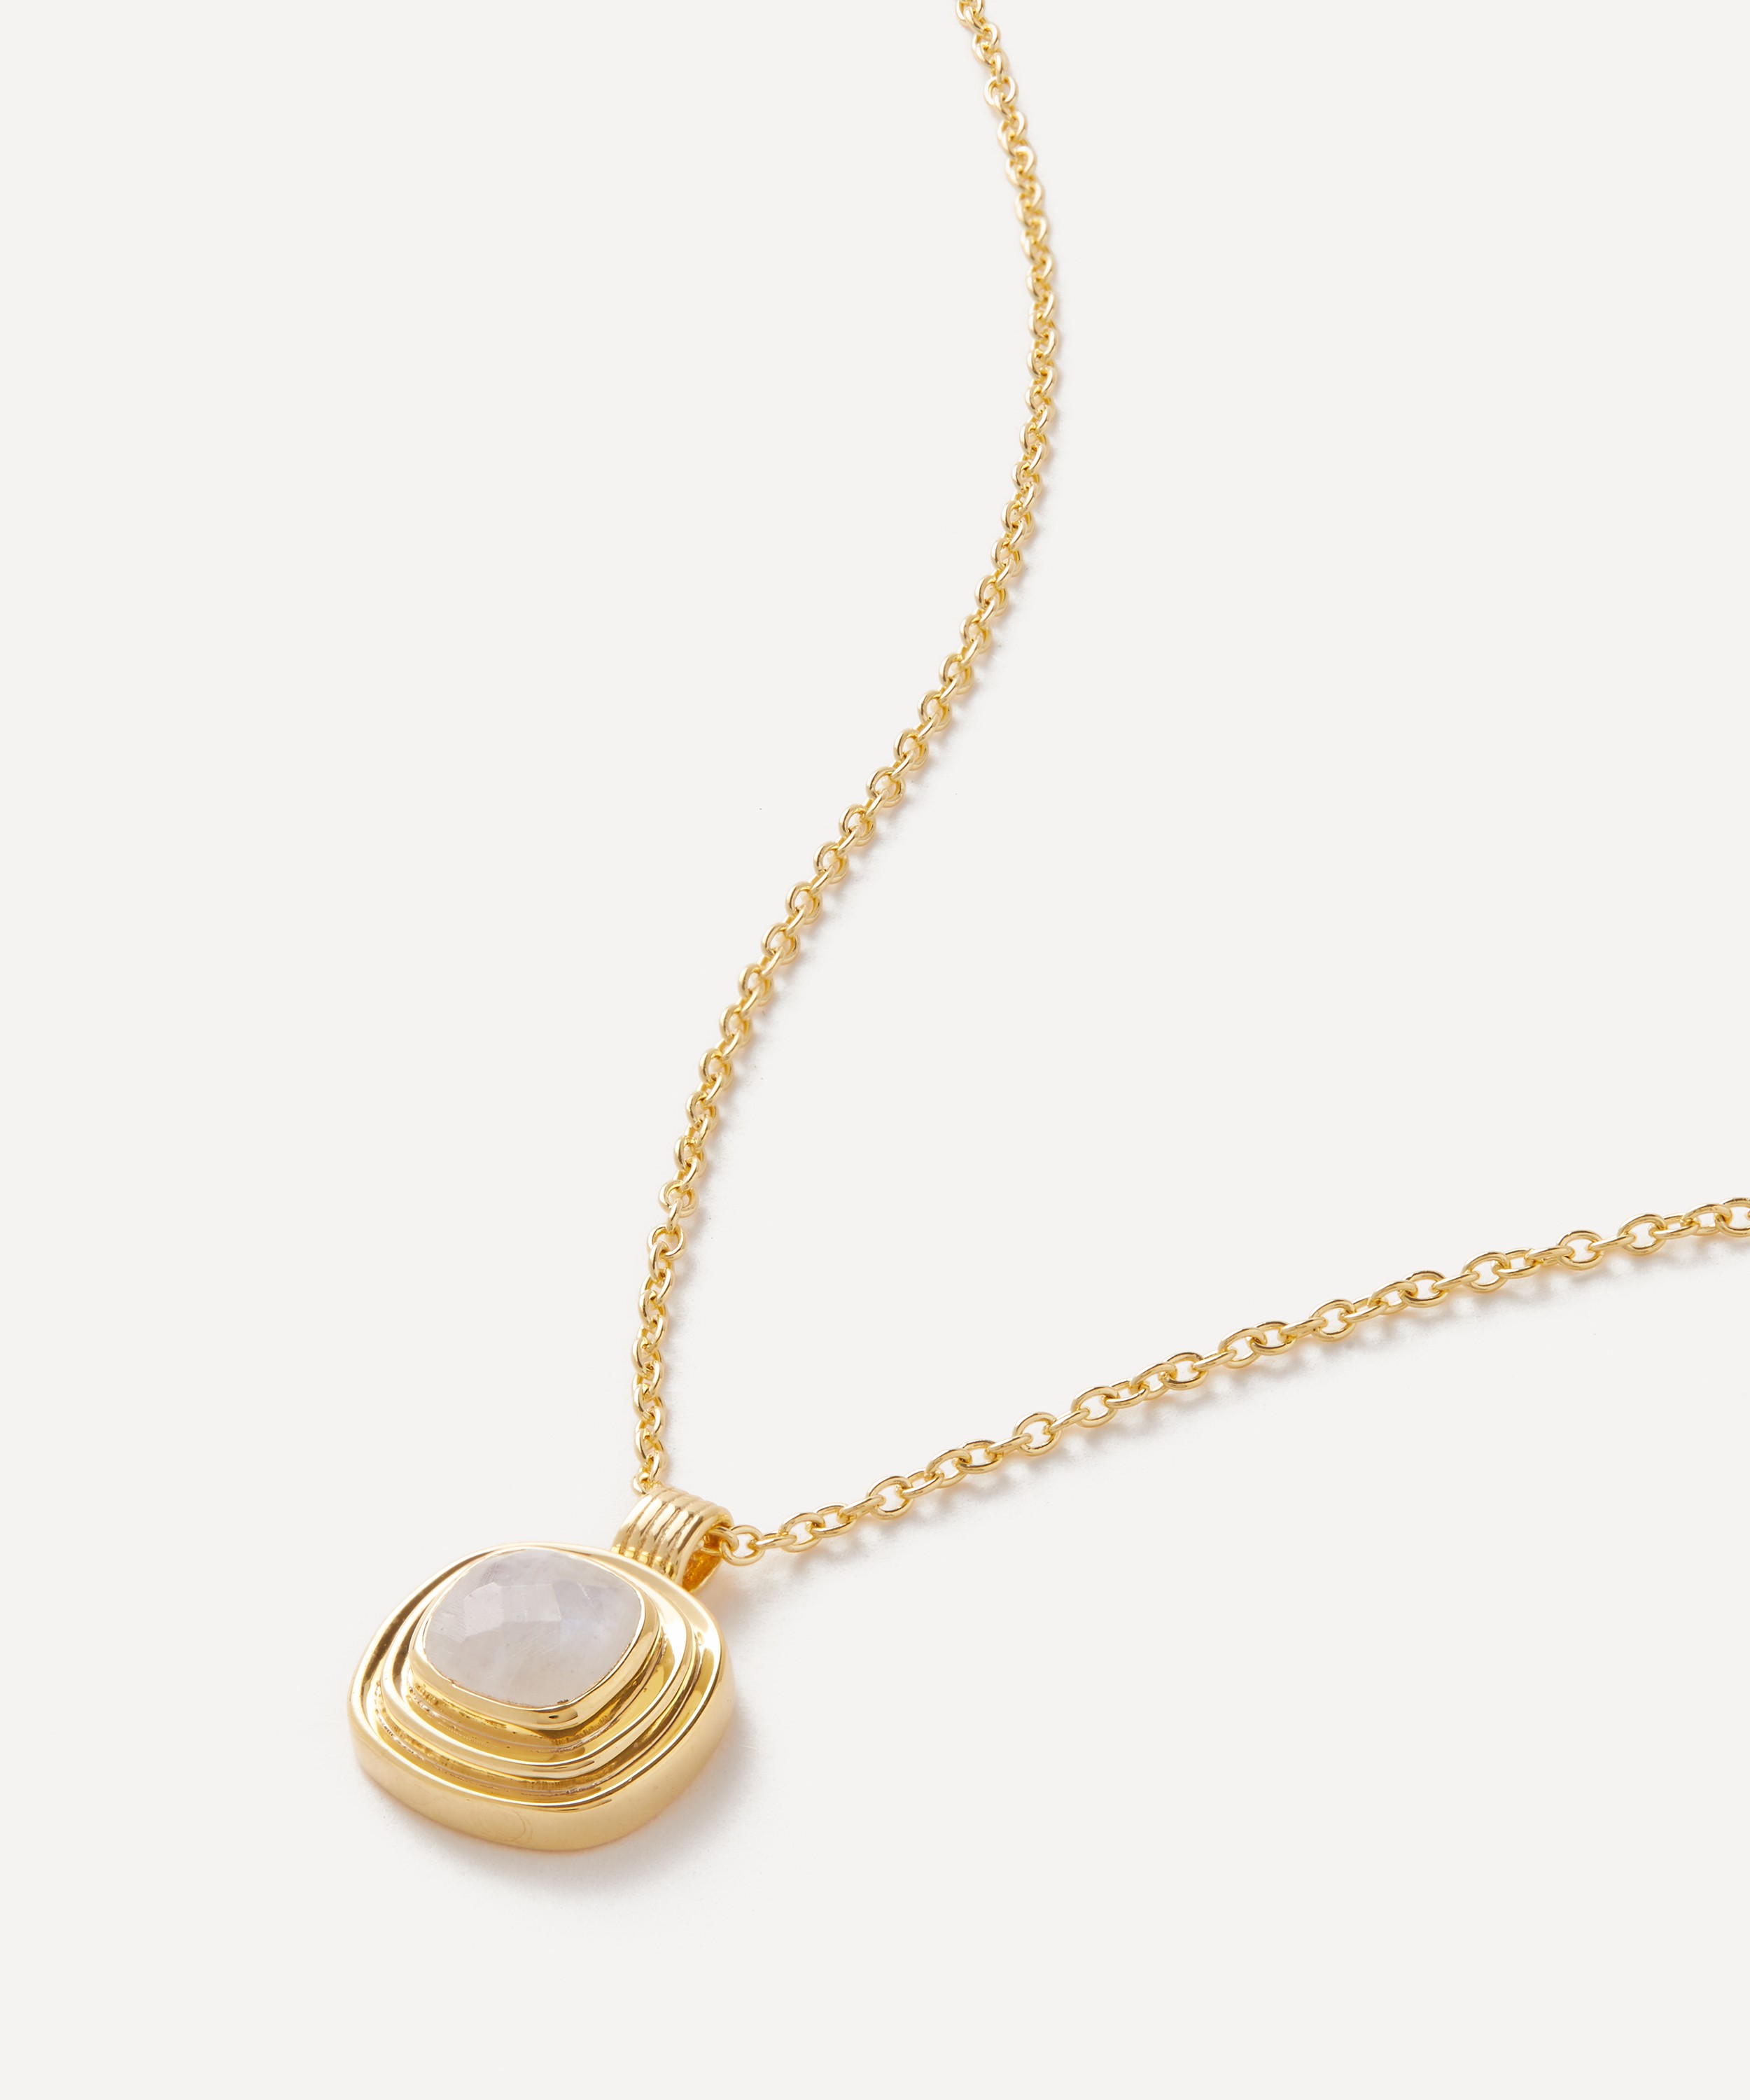 Auree - 18ct Gold-Plated Vermeil Silver California Cushion Moonstone Pendant Necklace